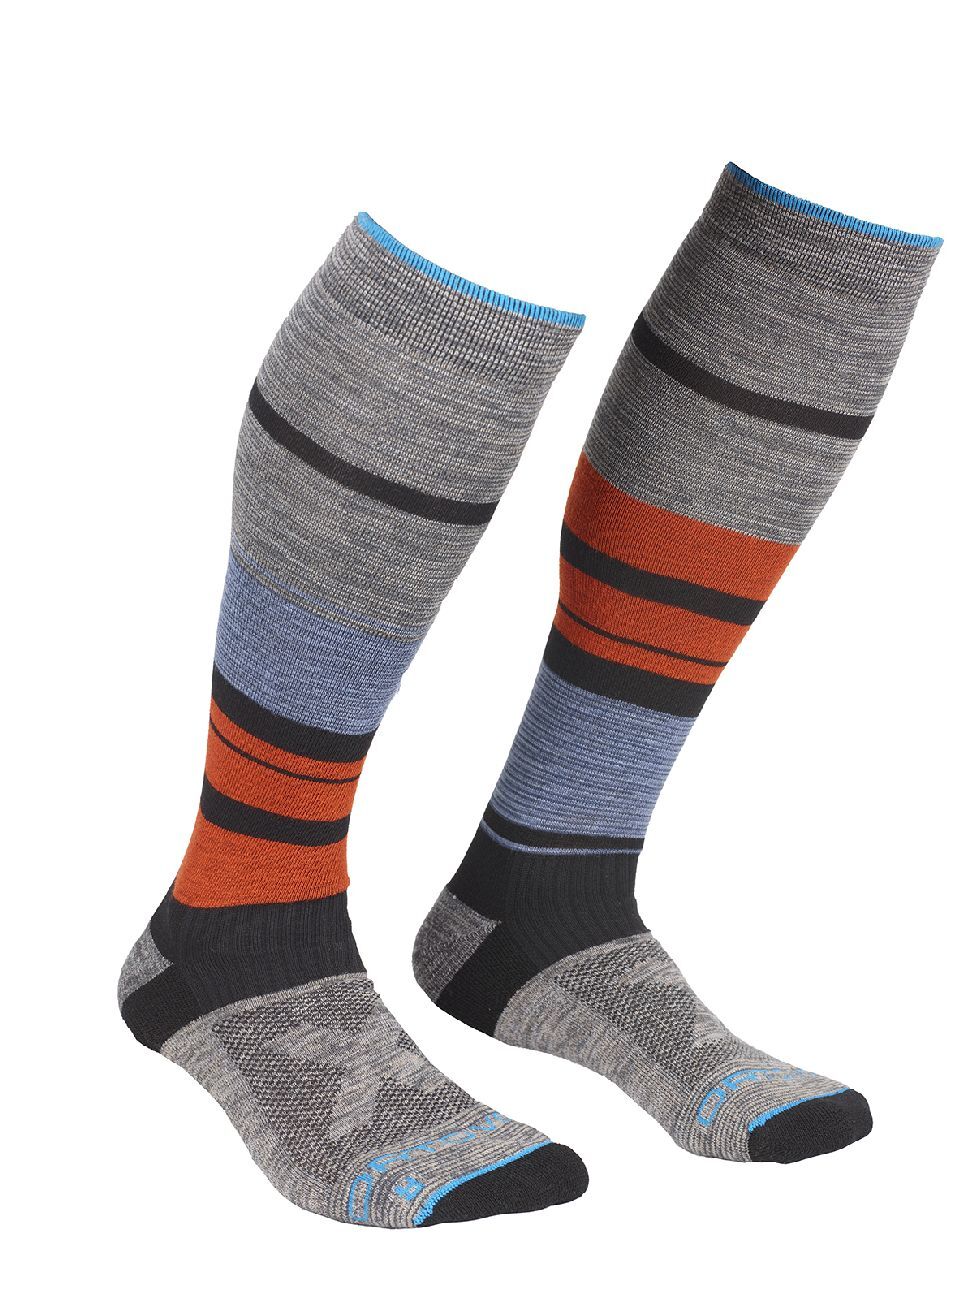 Ortovox All Mountain Long Socks Warm - Ski socks - Men's